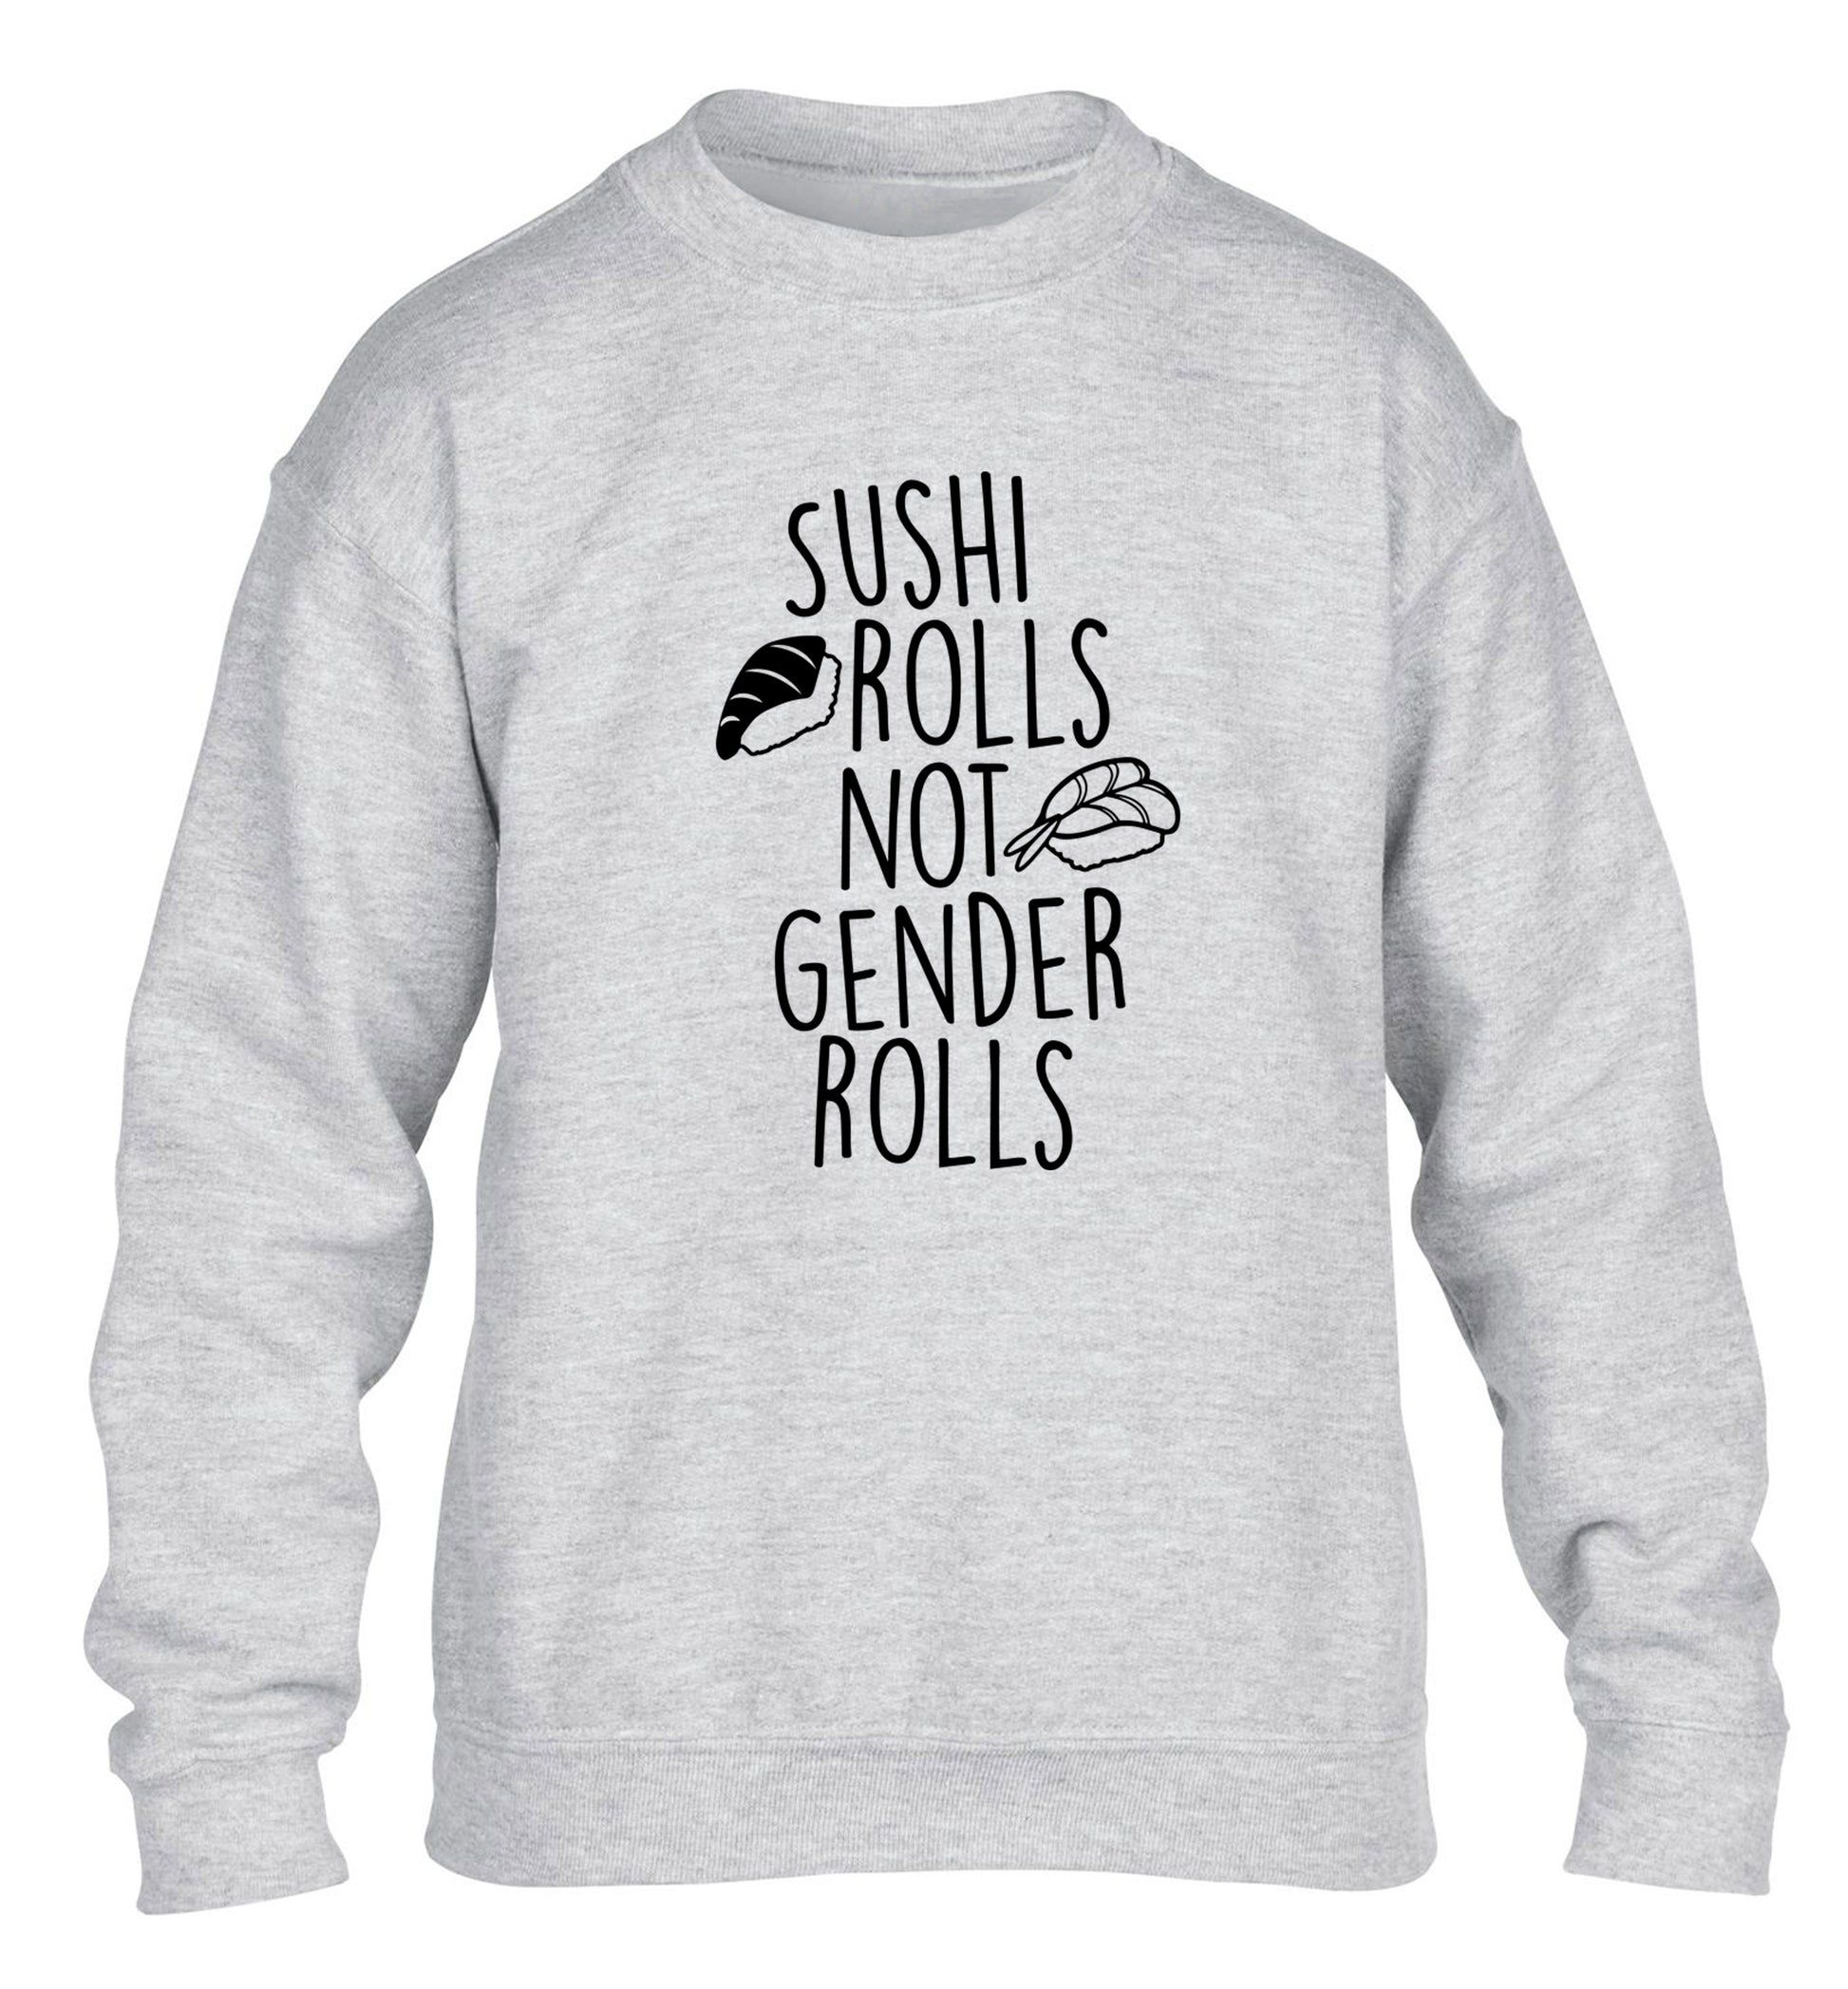 Sushi rolls not gender rolls children's grey sweater 12-14 Years